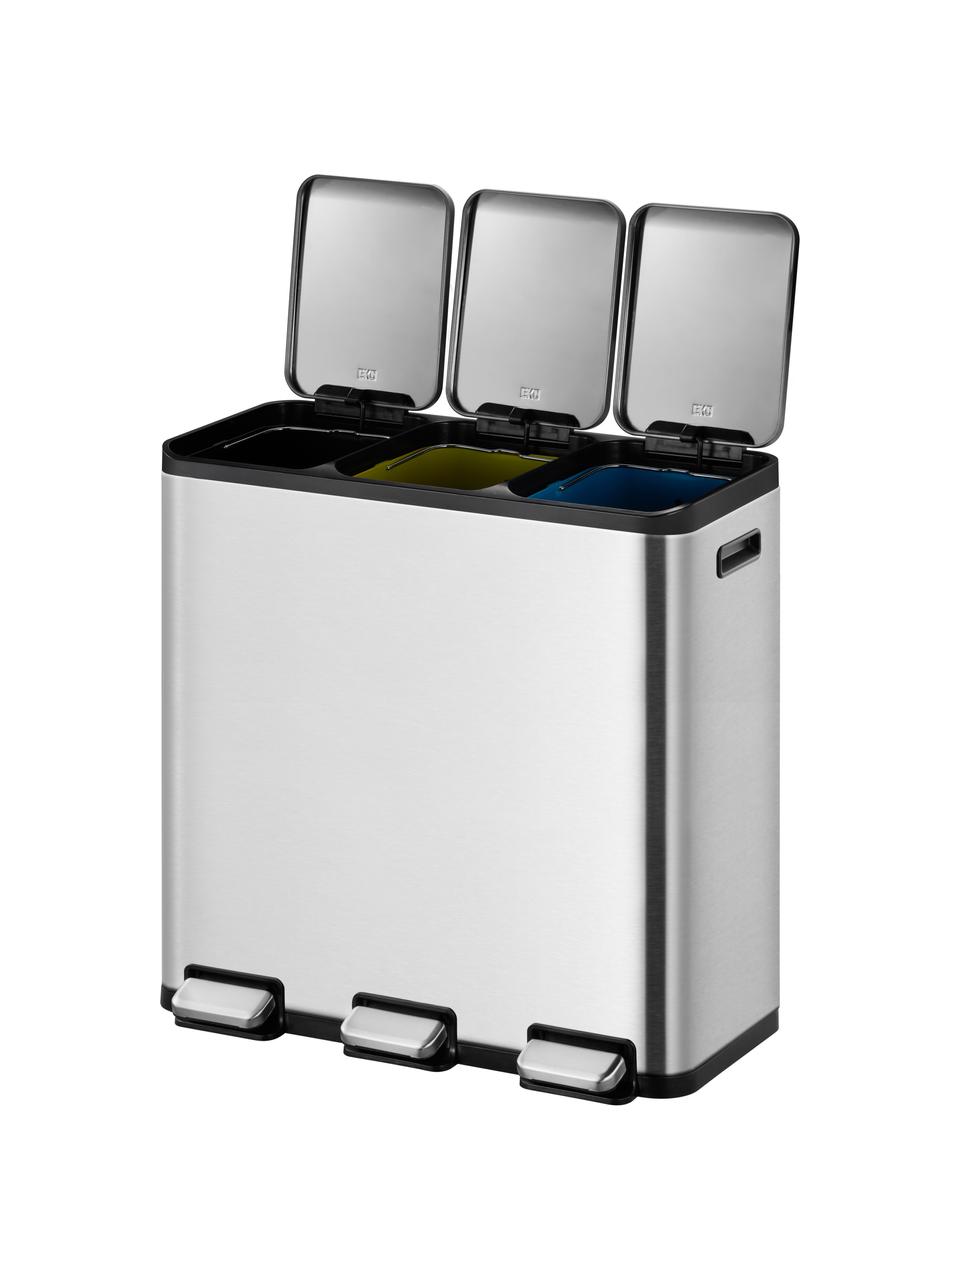 Abfalleimer EcoCasa mit Pedal-Funktion, 3 x 15 L, Behälter: Edelstahl, gebürstet, Silberfarben, B 61 x H 51 cm, 3 x 15 L